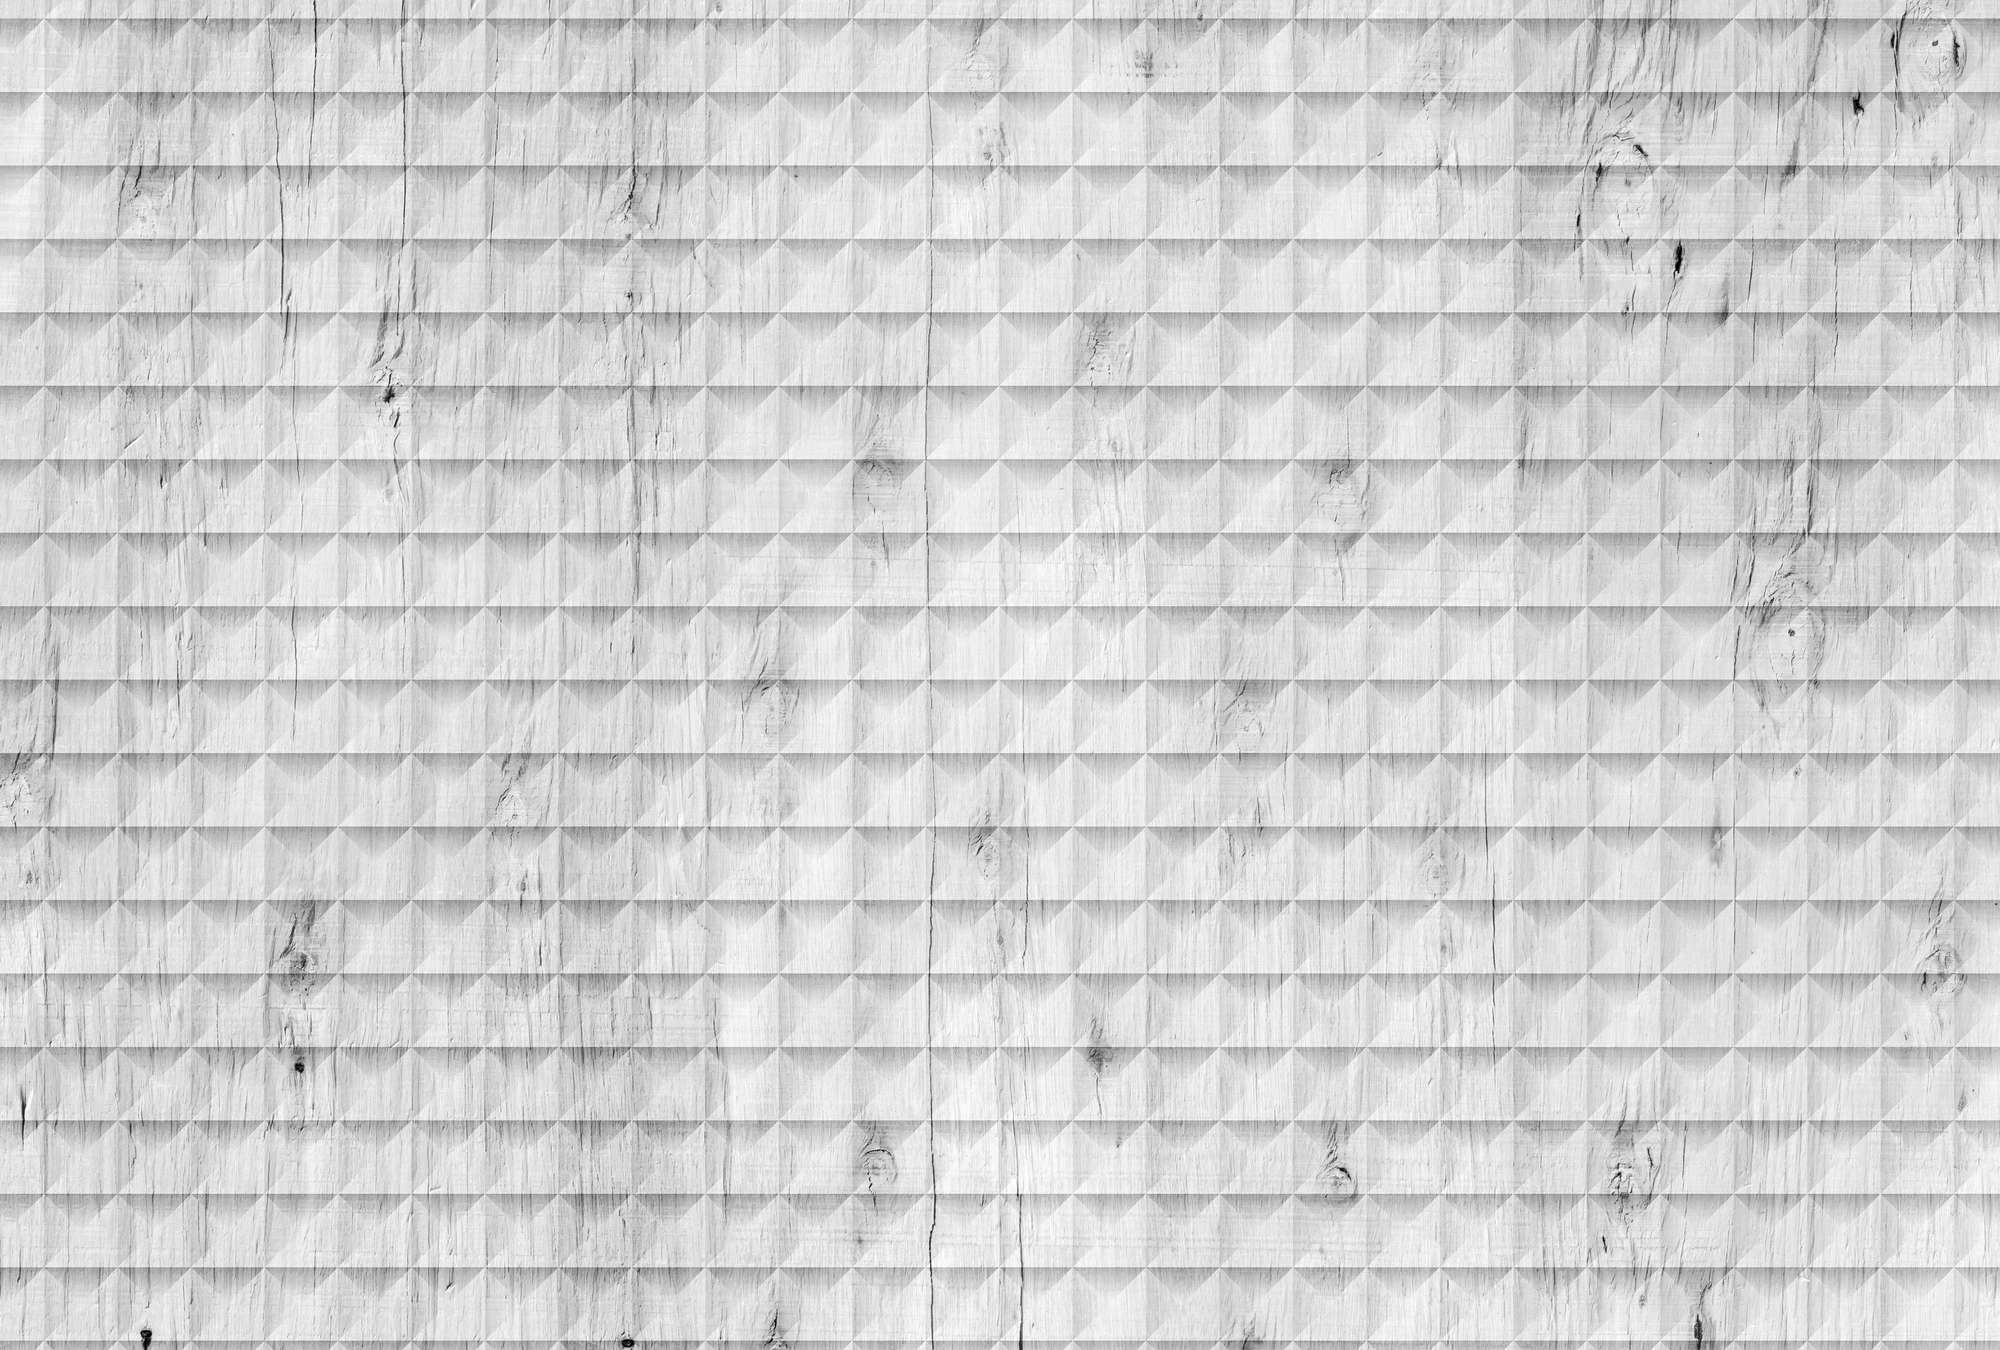             Wit Hout Behang, Korrel & Geometrisch Patroon - Wit, Grijs, Zwart
        